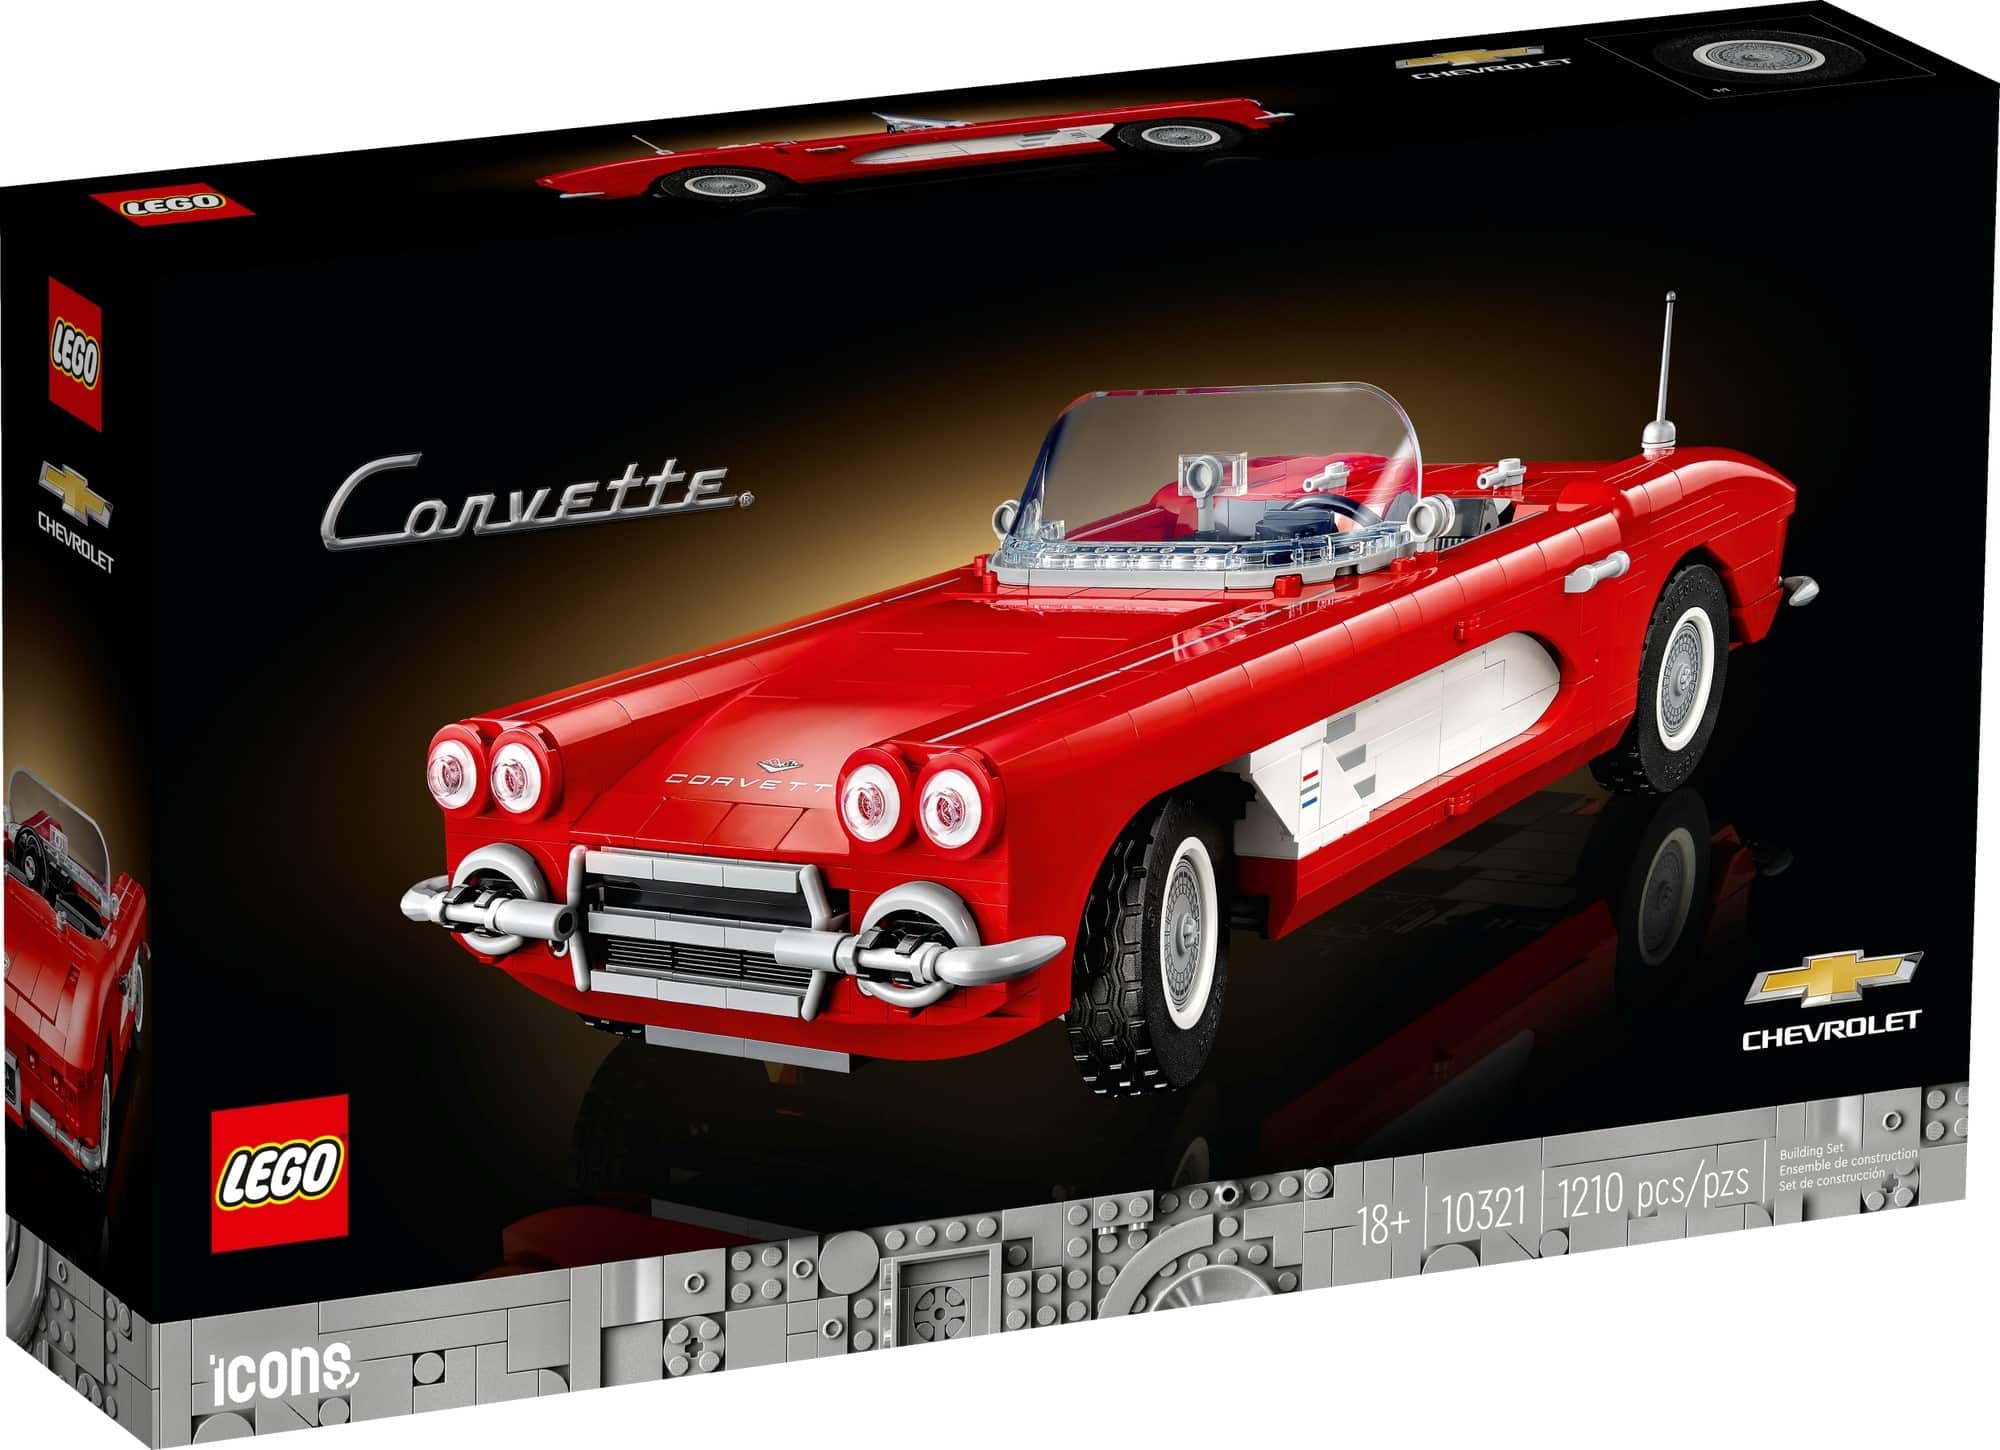 LEGO Creator Expert 10321 Corvette 2